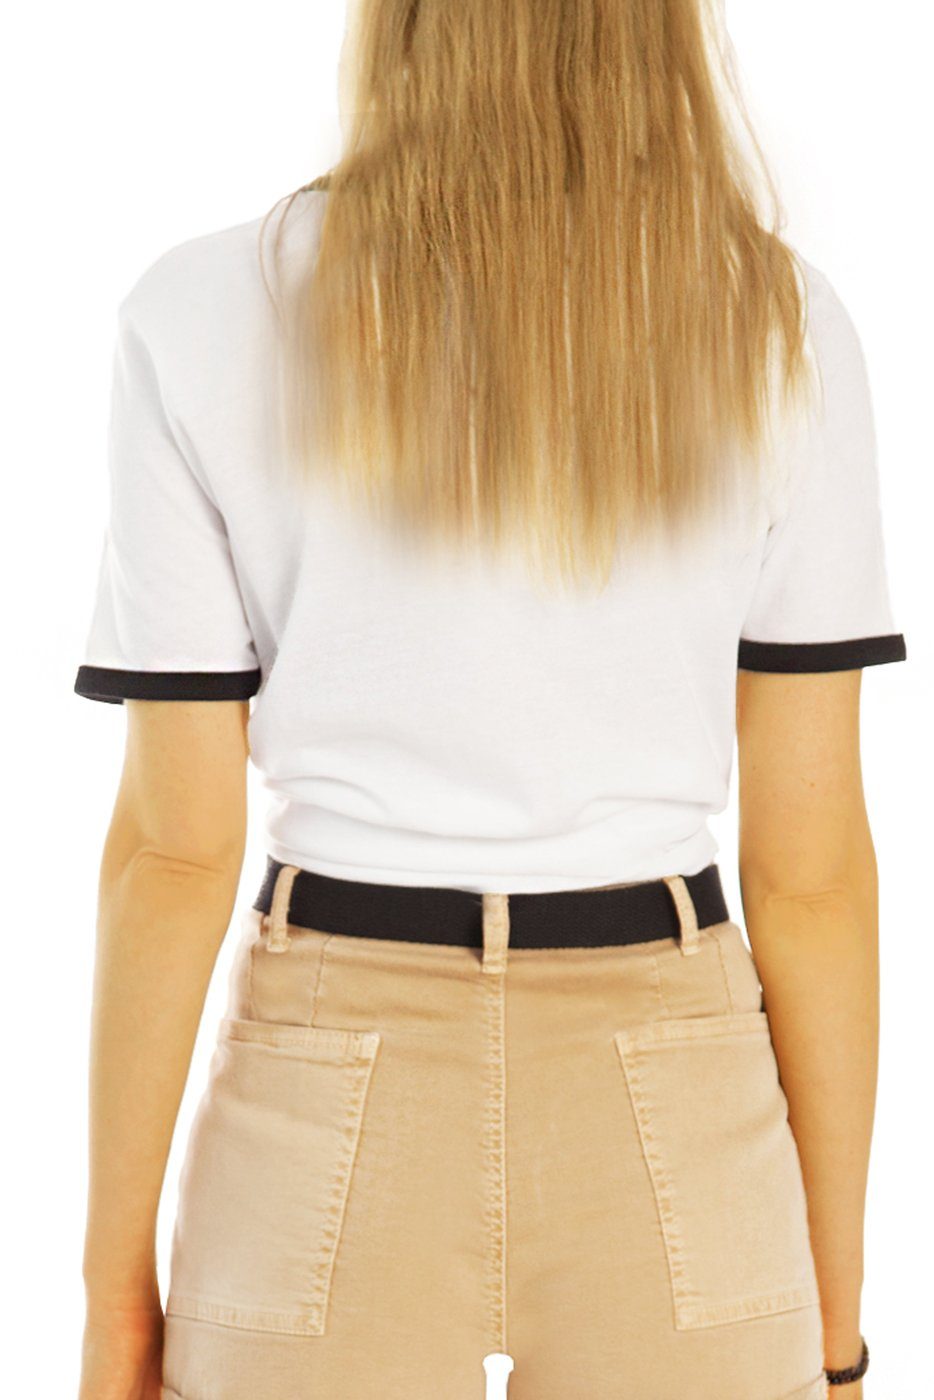 Hosen mit Damen Gürtel, kurze Stretchanteil styled Gürtel - mit Shorts Hotpants - Shorts be weiß j14e mit